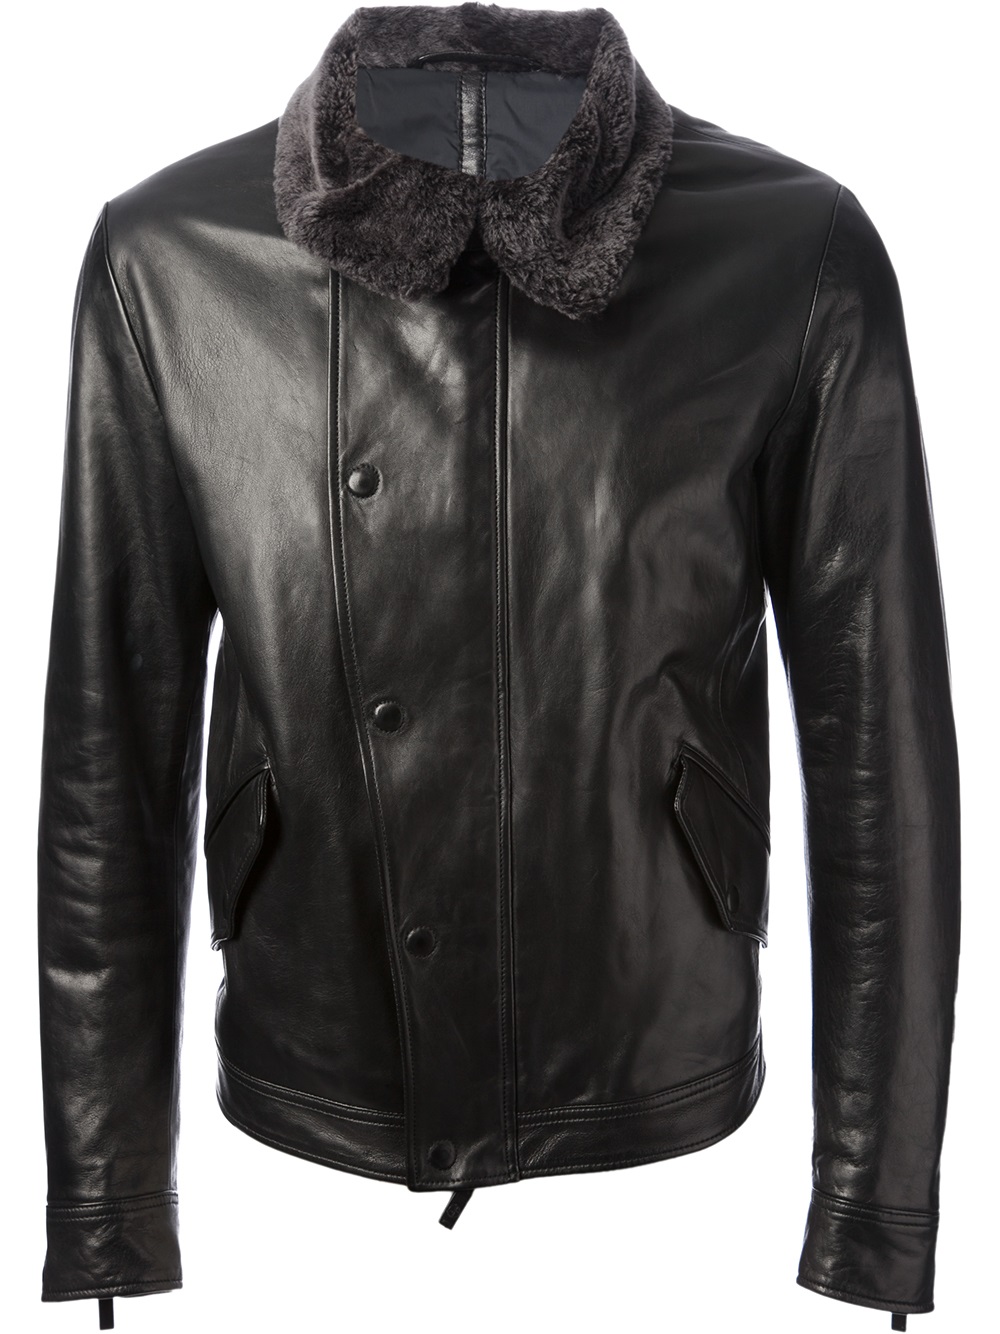 Lyst - Giorgio Armani Leather Jacket in Black for Men